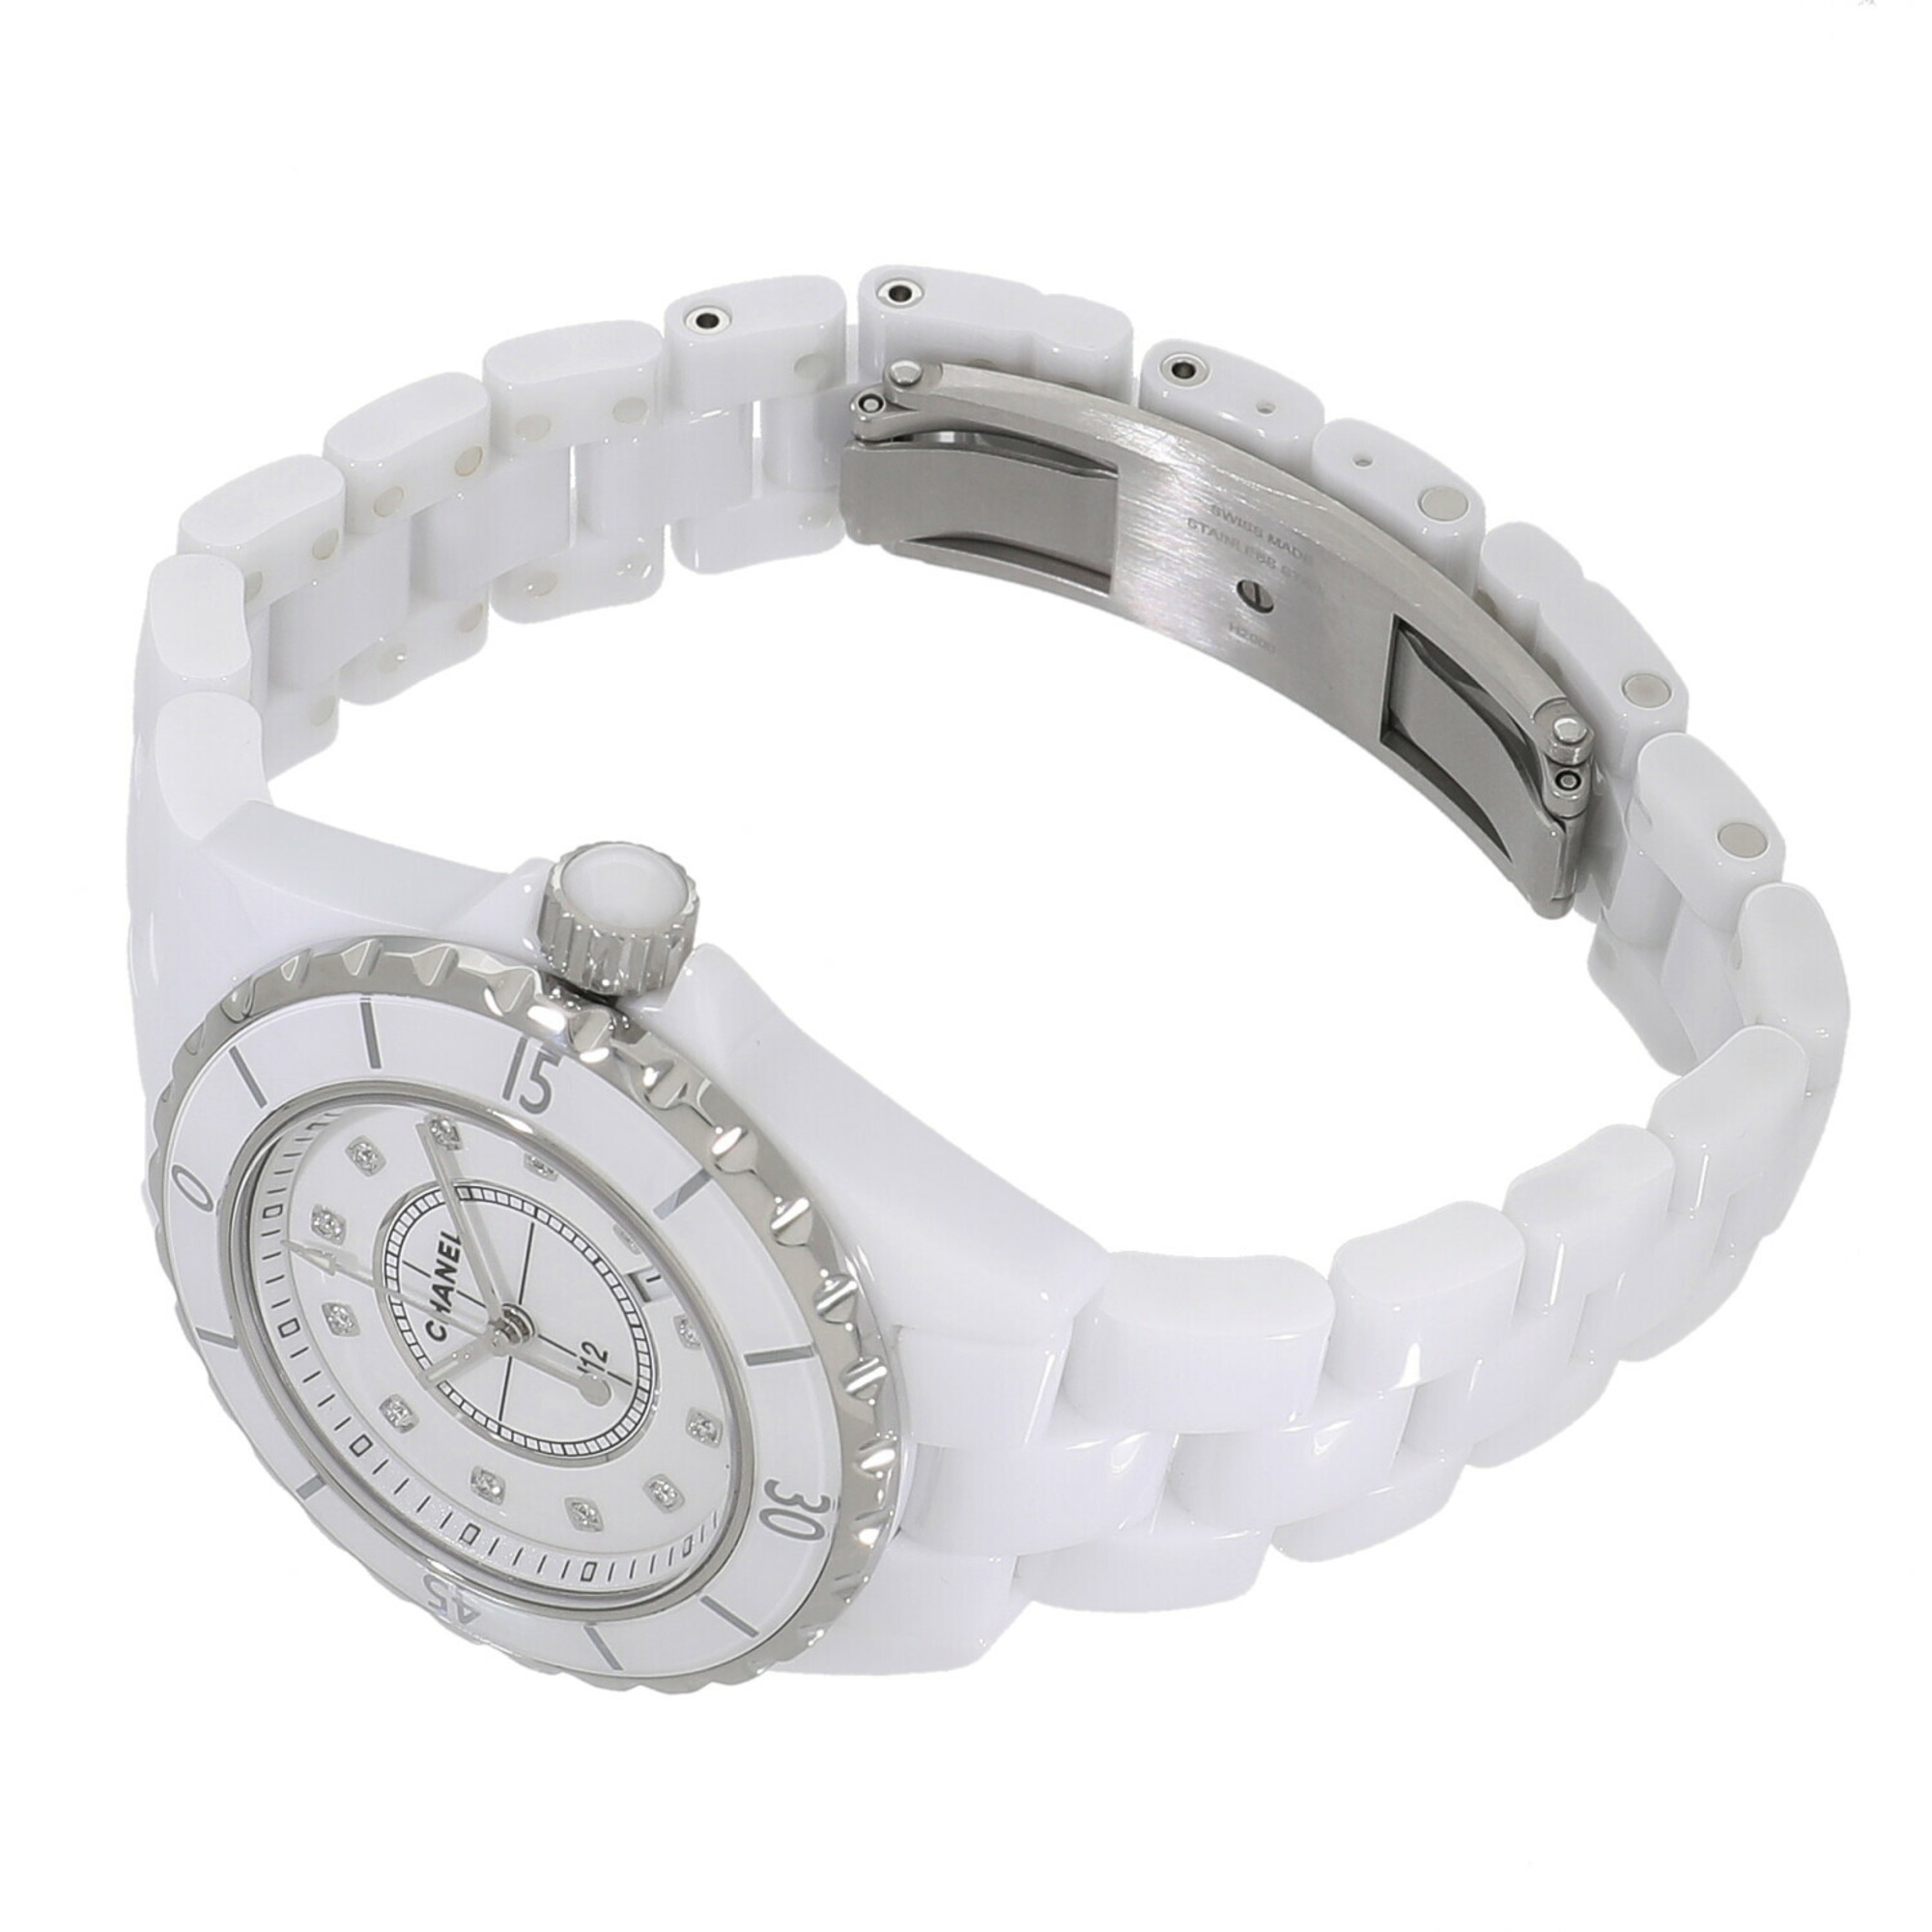 Chanel J12 White Ceramic 33MM x 12P Diamond H1628 Ladies Watch